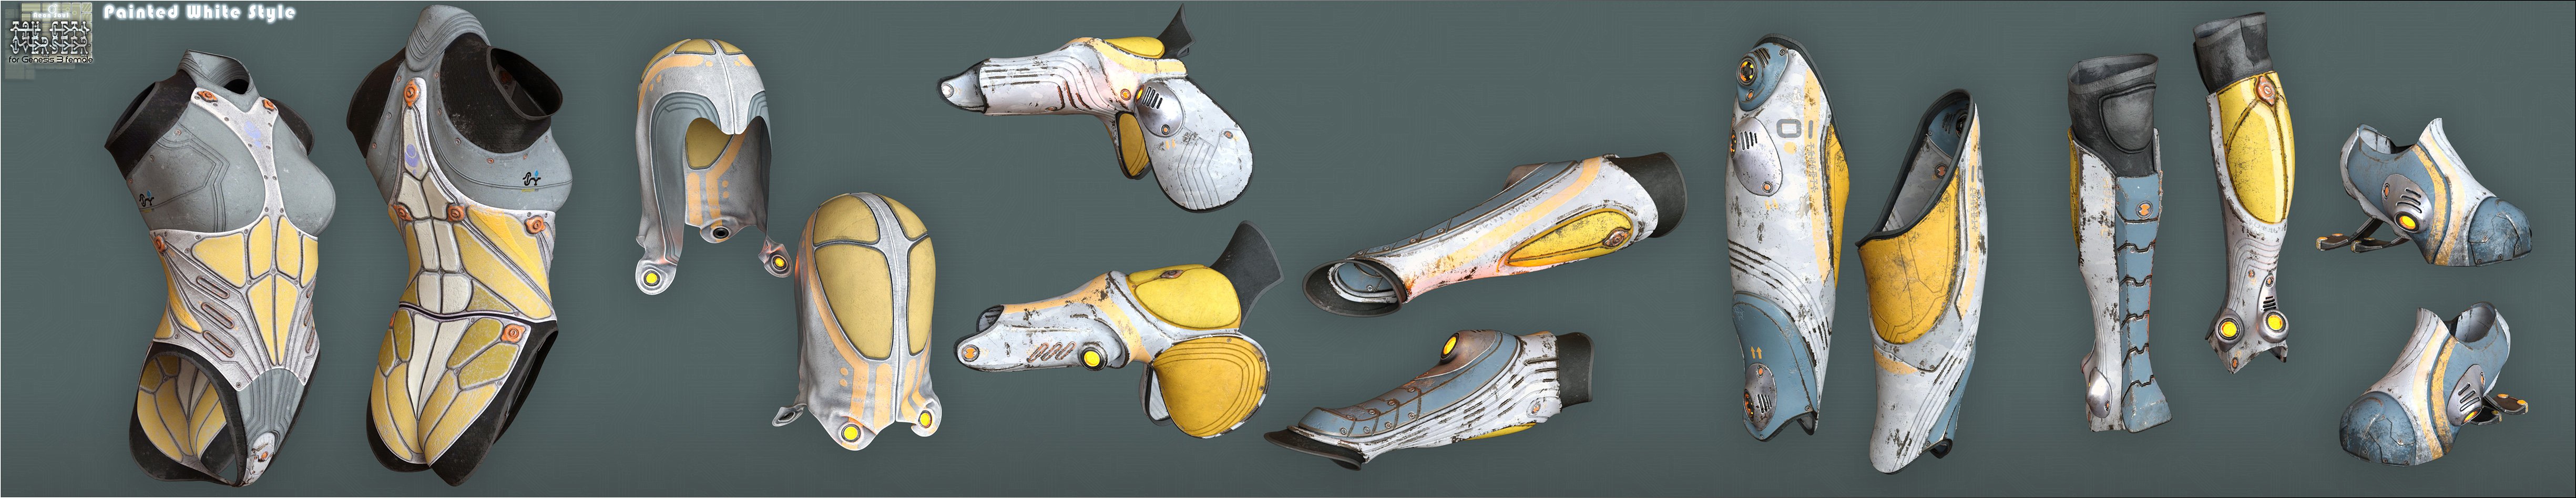 Tau Ceti Overseer - Sci-fi Armor for Genesis 3 Female(s) by: Aeon Soul, 3D Models by Daz 3D